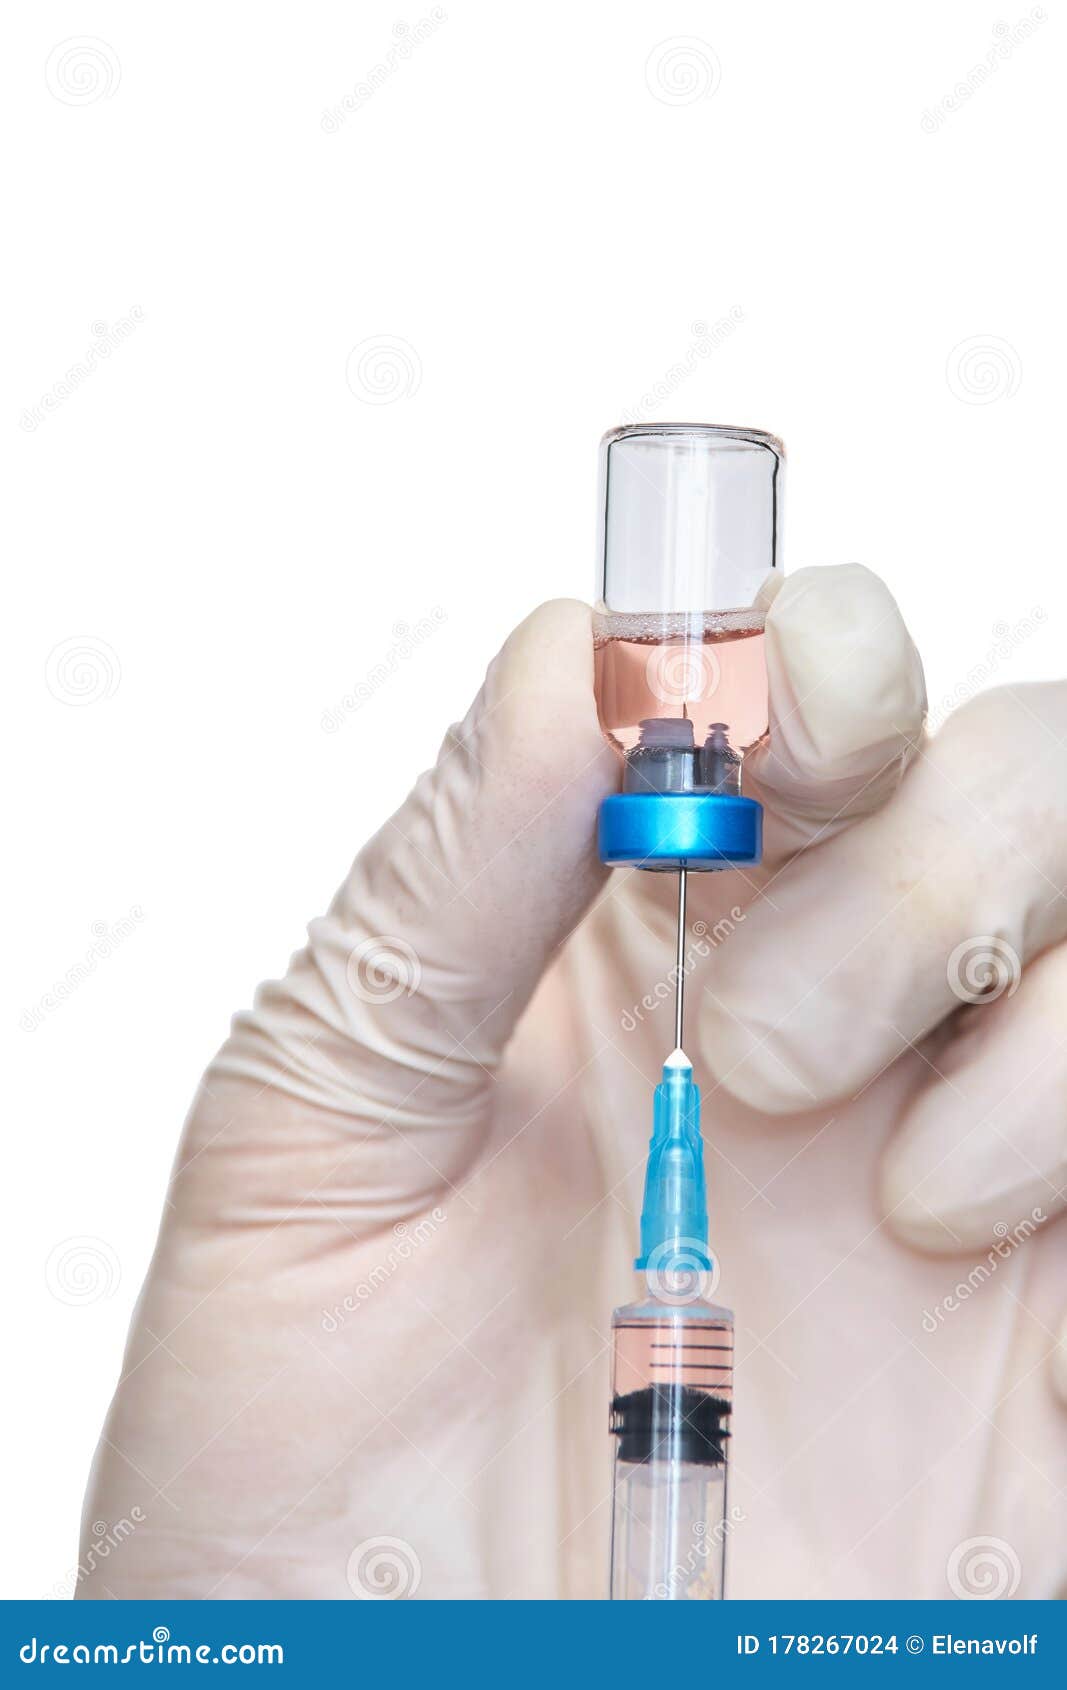 hand in glove hold vaccine.